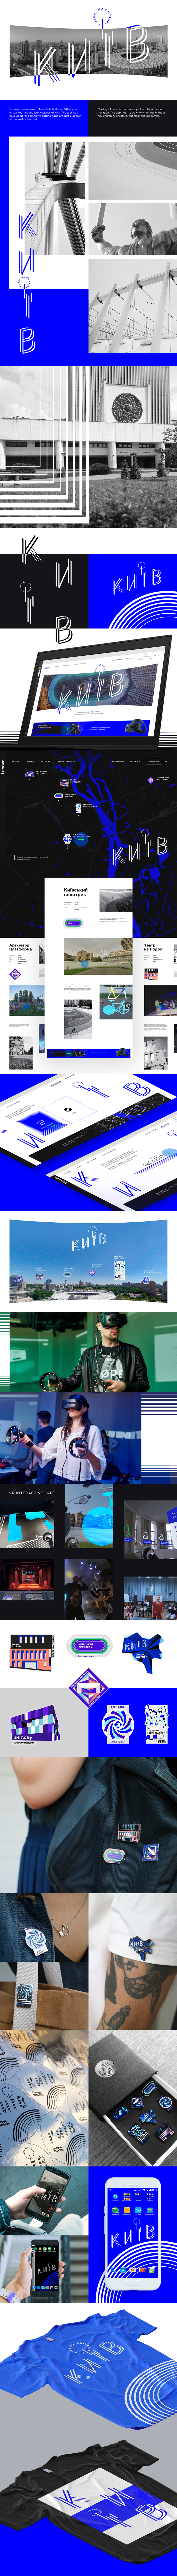 Kyiv from dawn till dusk. The VR-tour